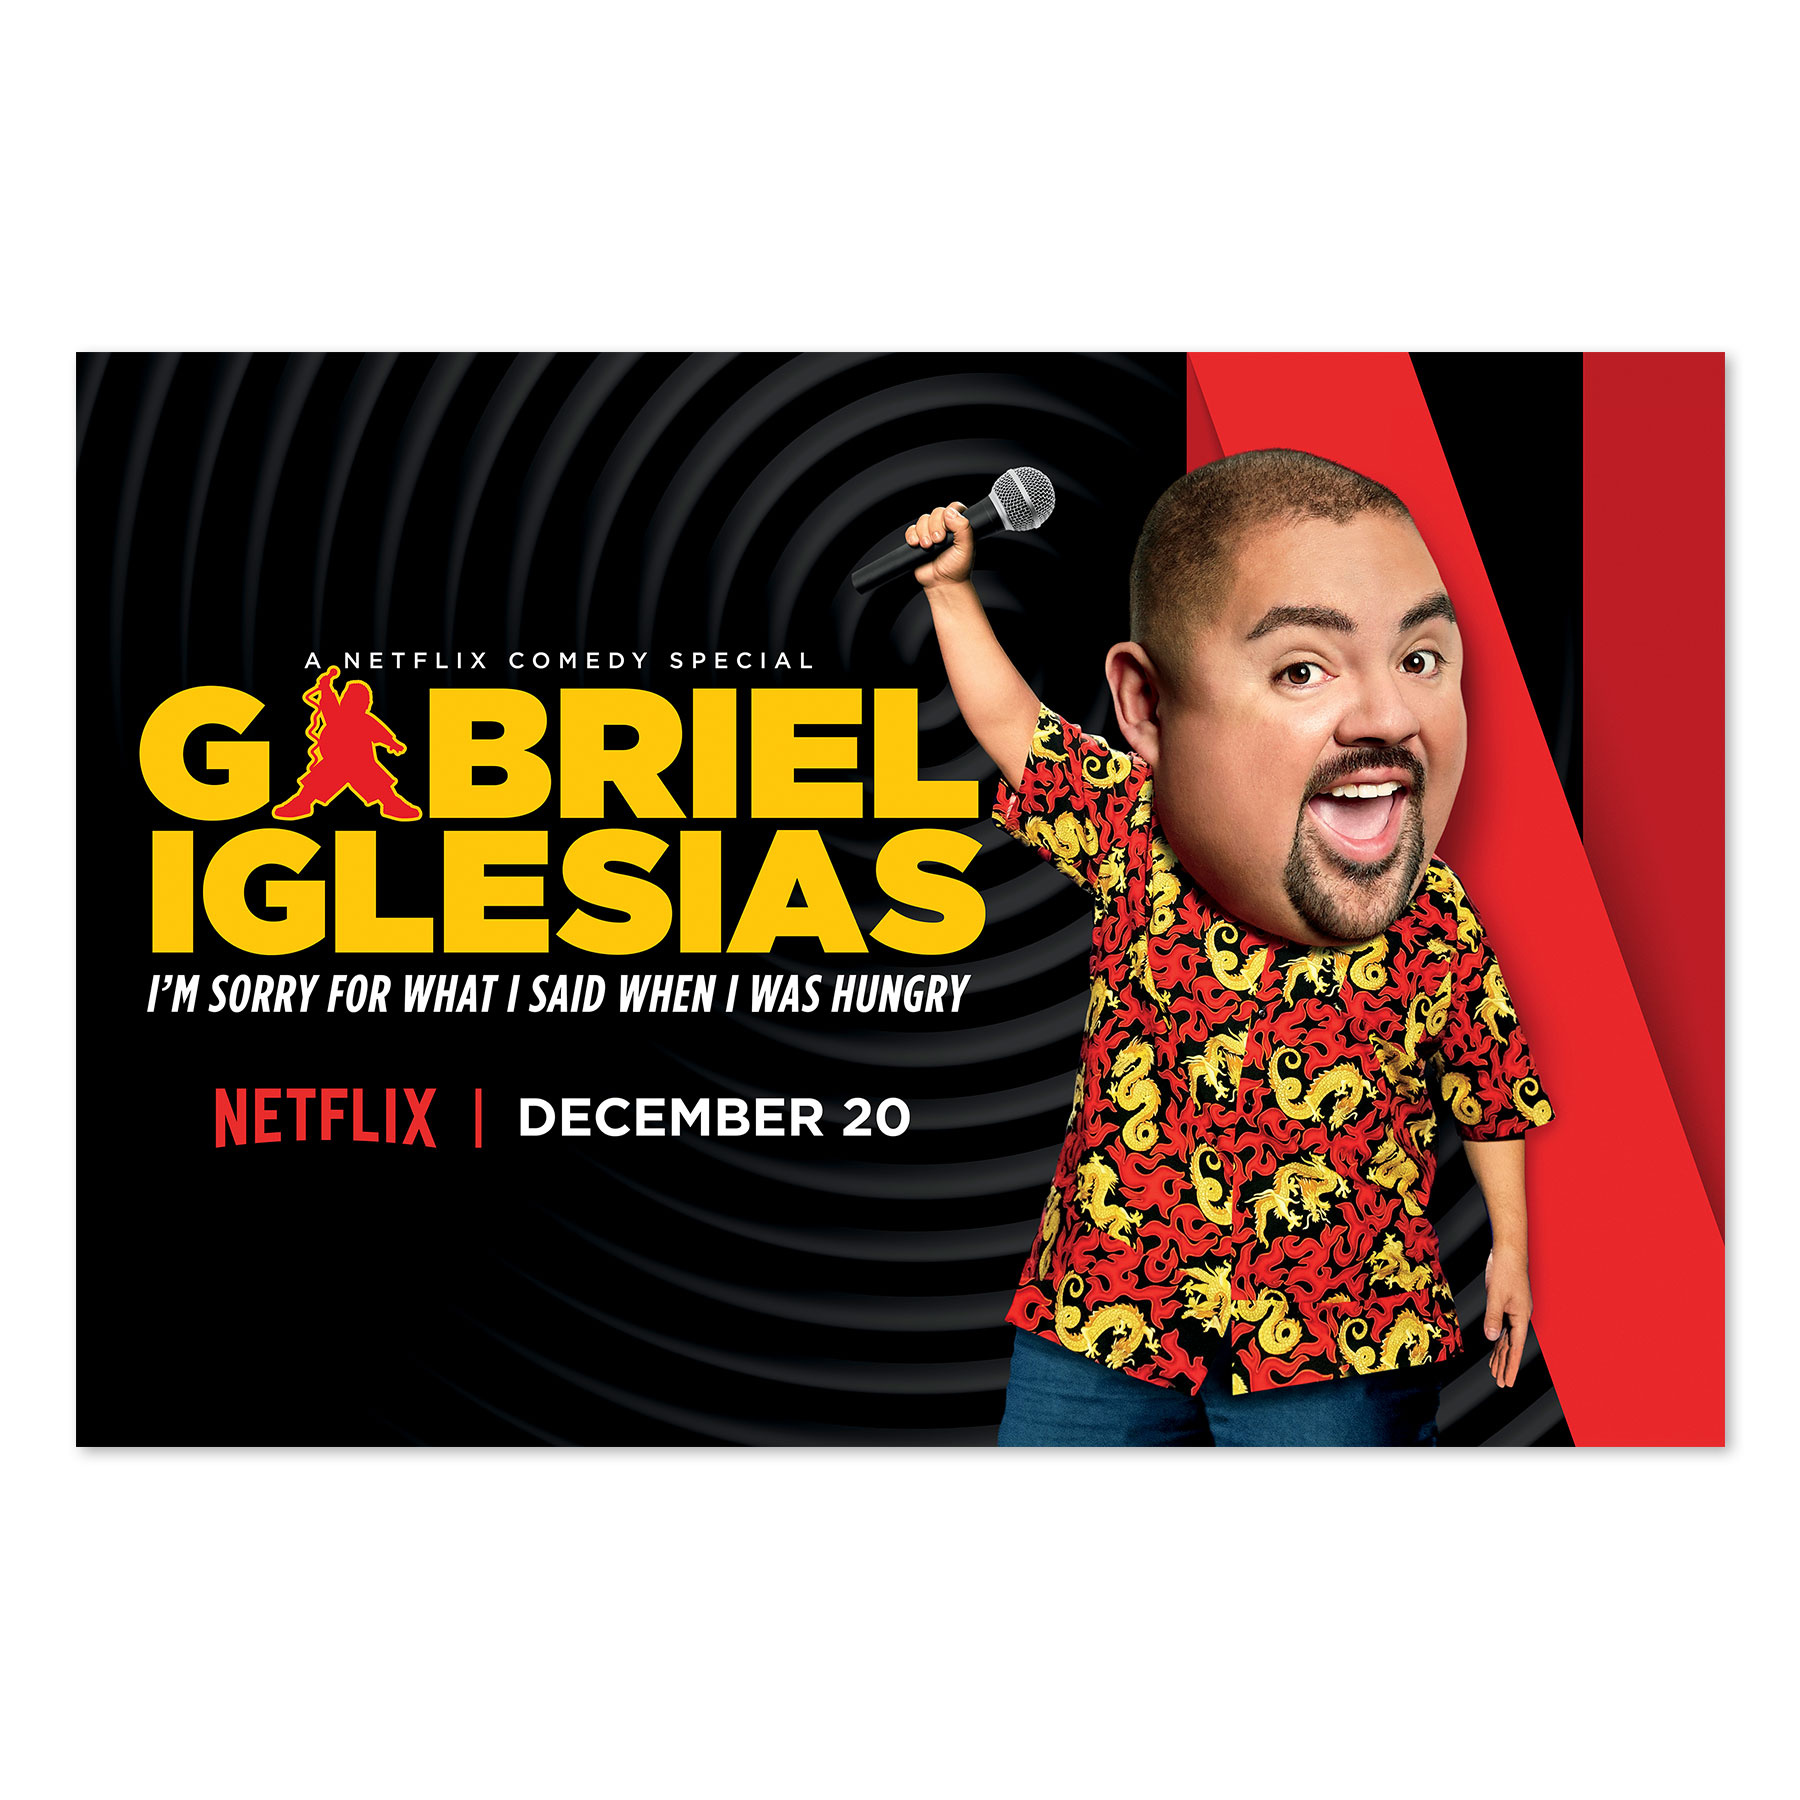 Gabriel Iglesias Digital Banner for Netflix